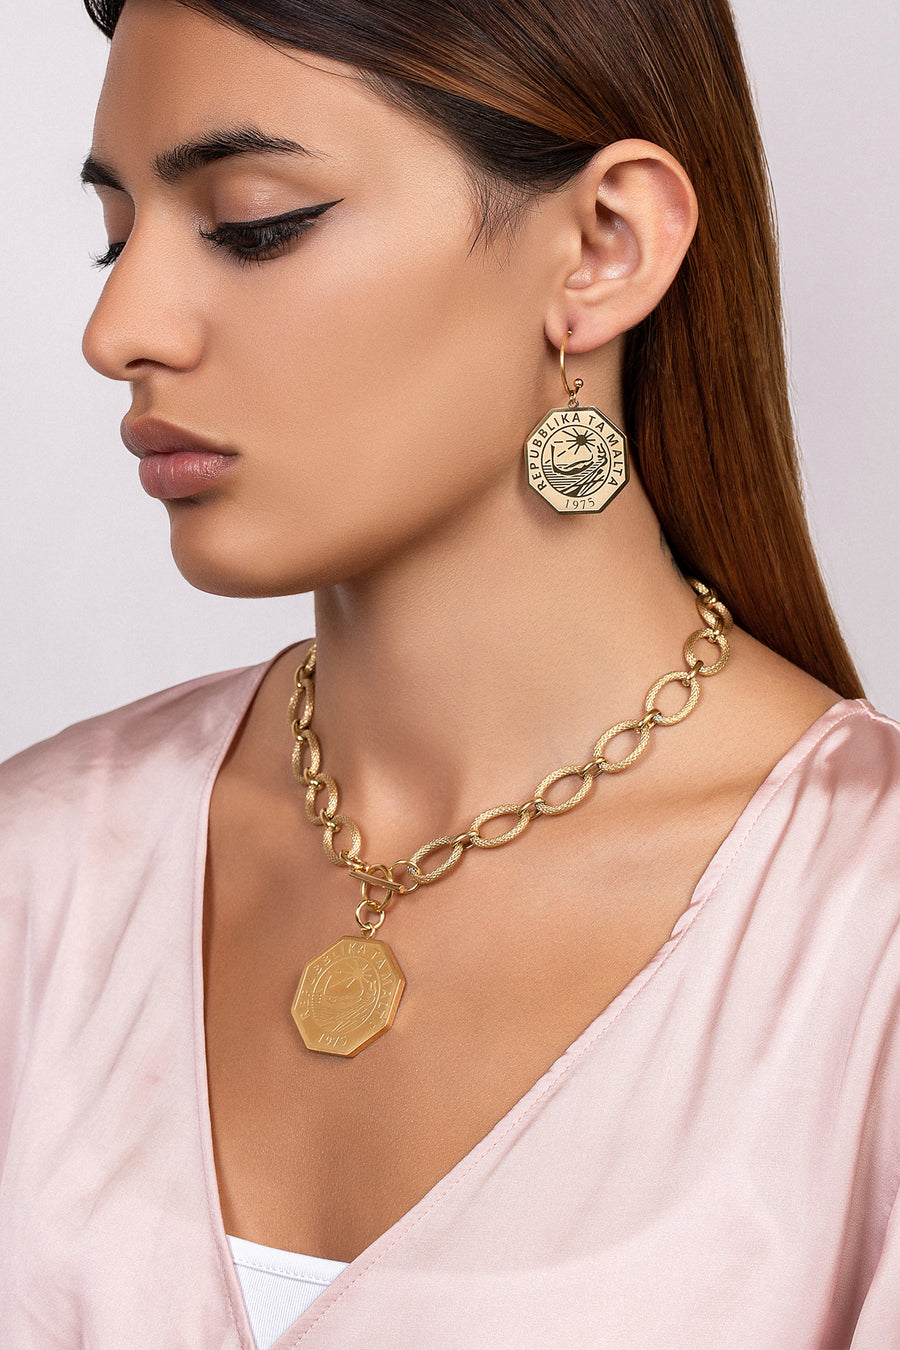 Octagon 25 Cent Luzzu Coin Pendant Chain Necklace & Earring Set